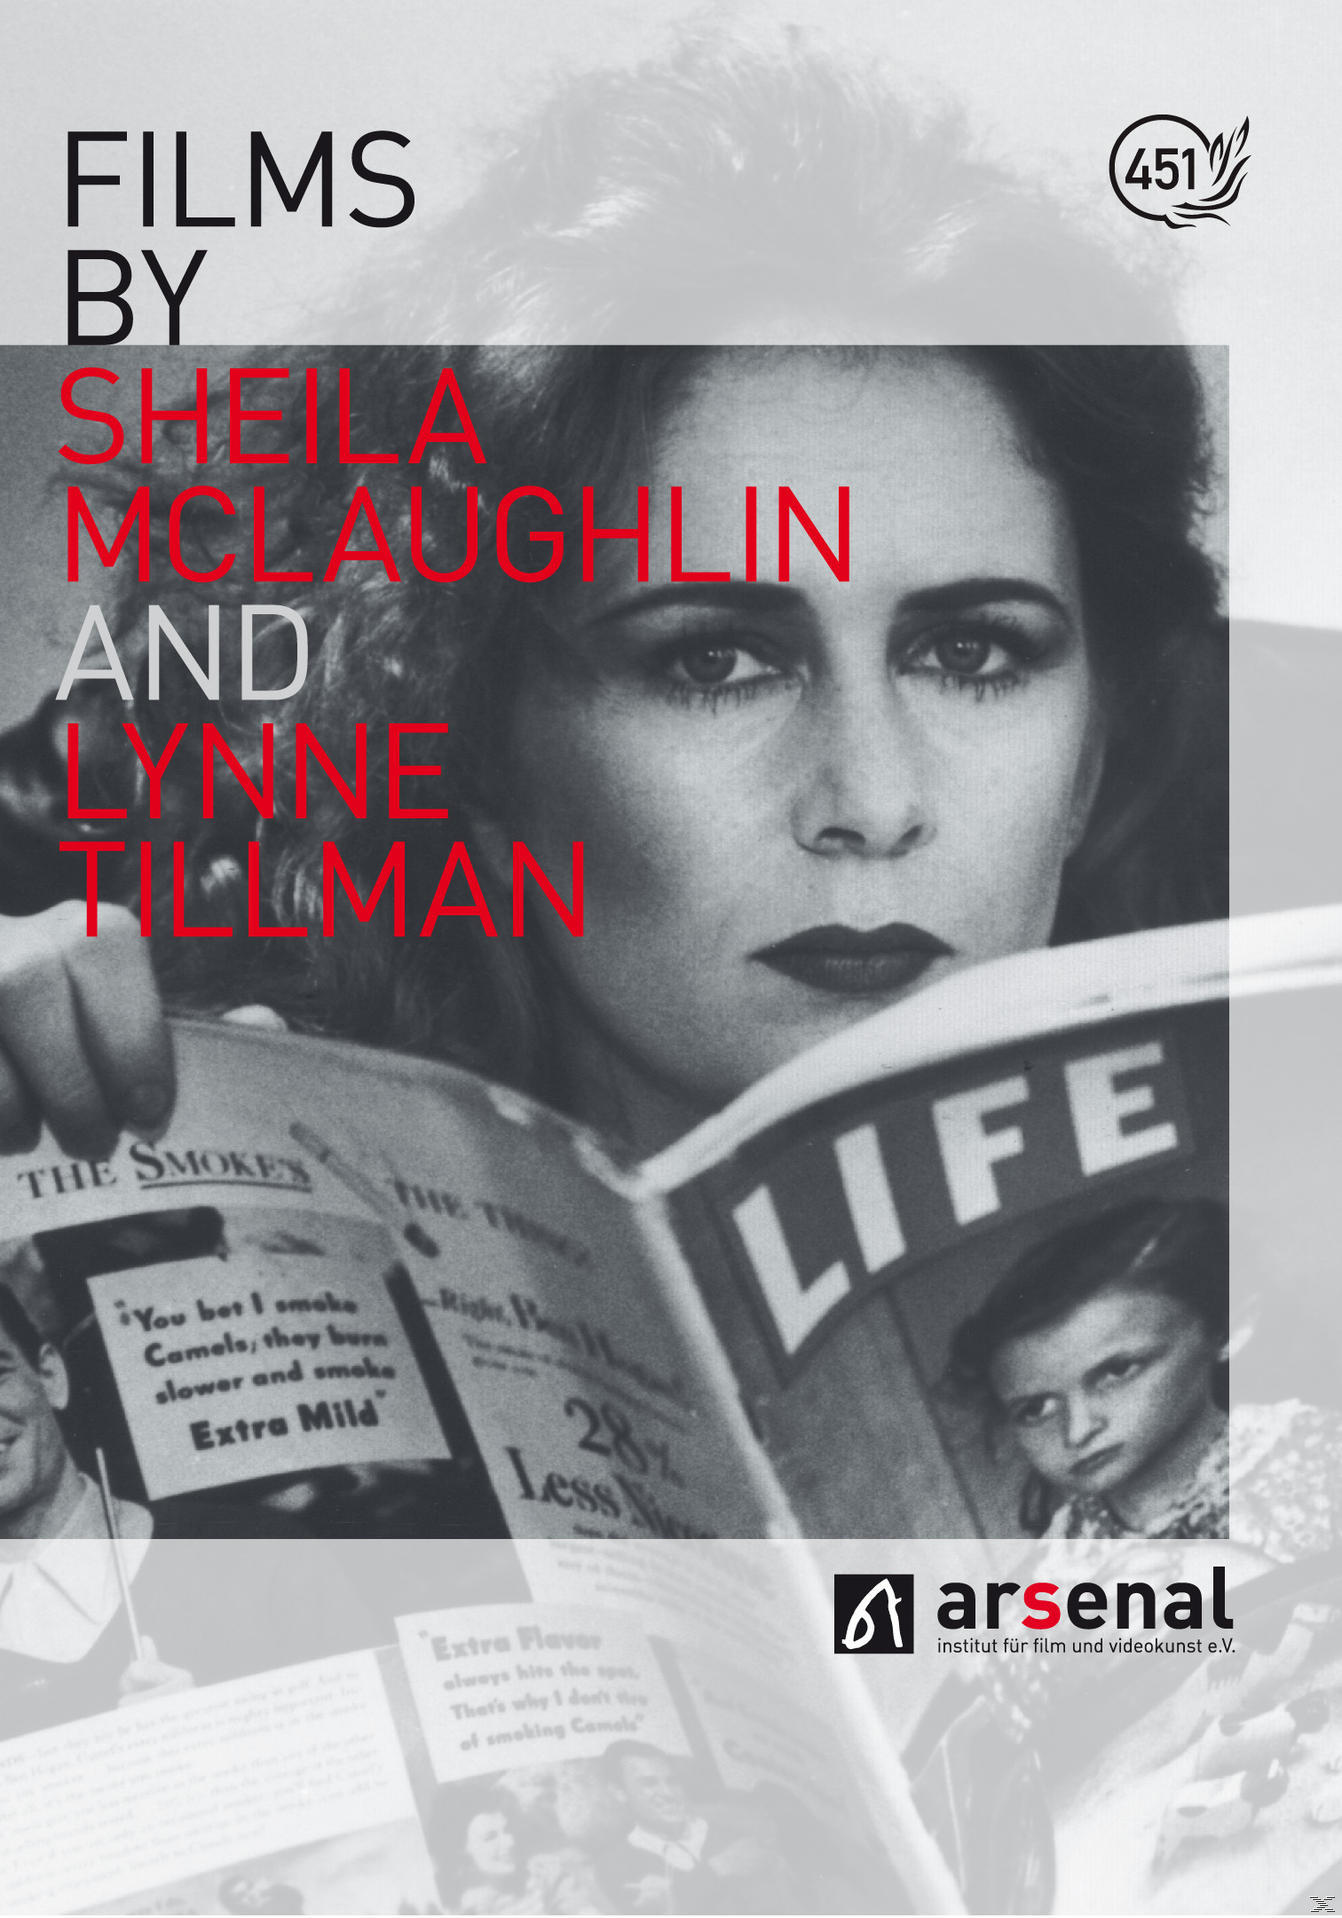 FILMS BY SHEILA MCLAUGHLIN AND LYNNE DVD TILLMAN